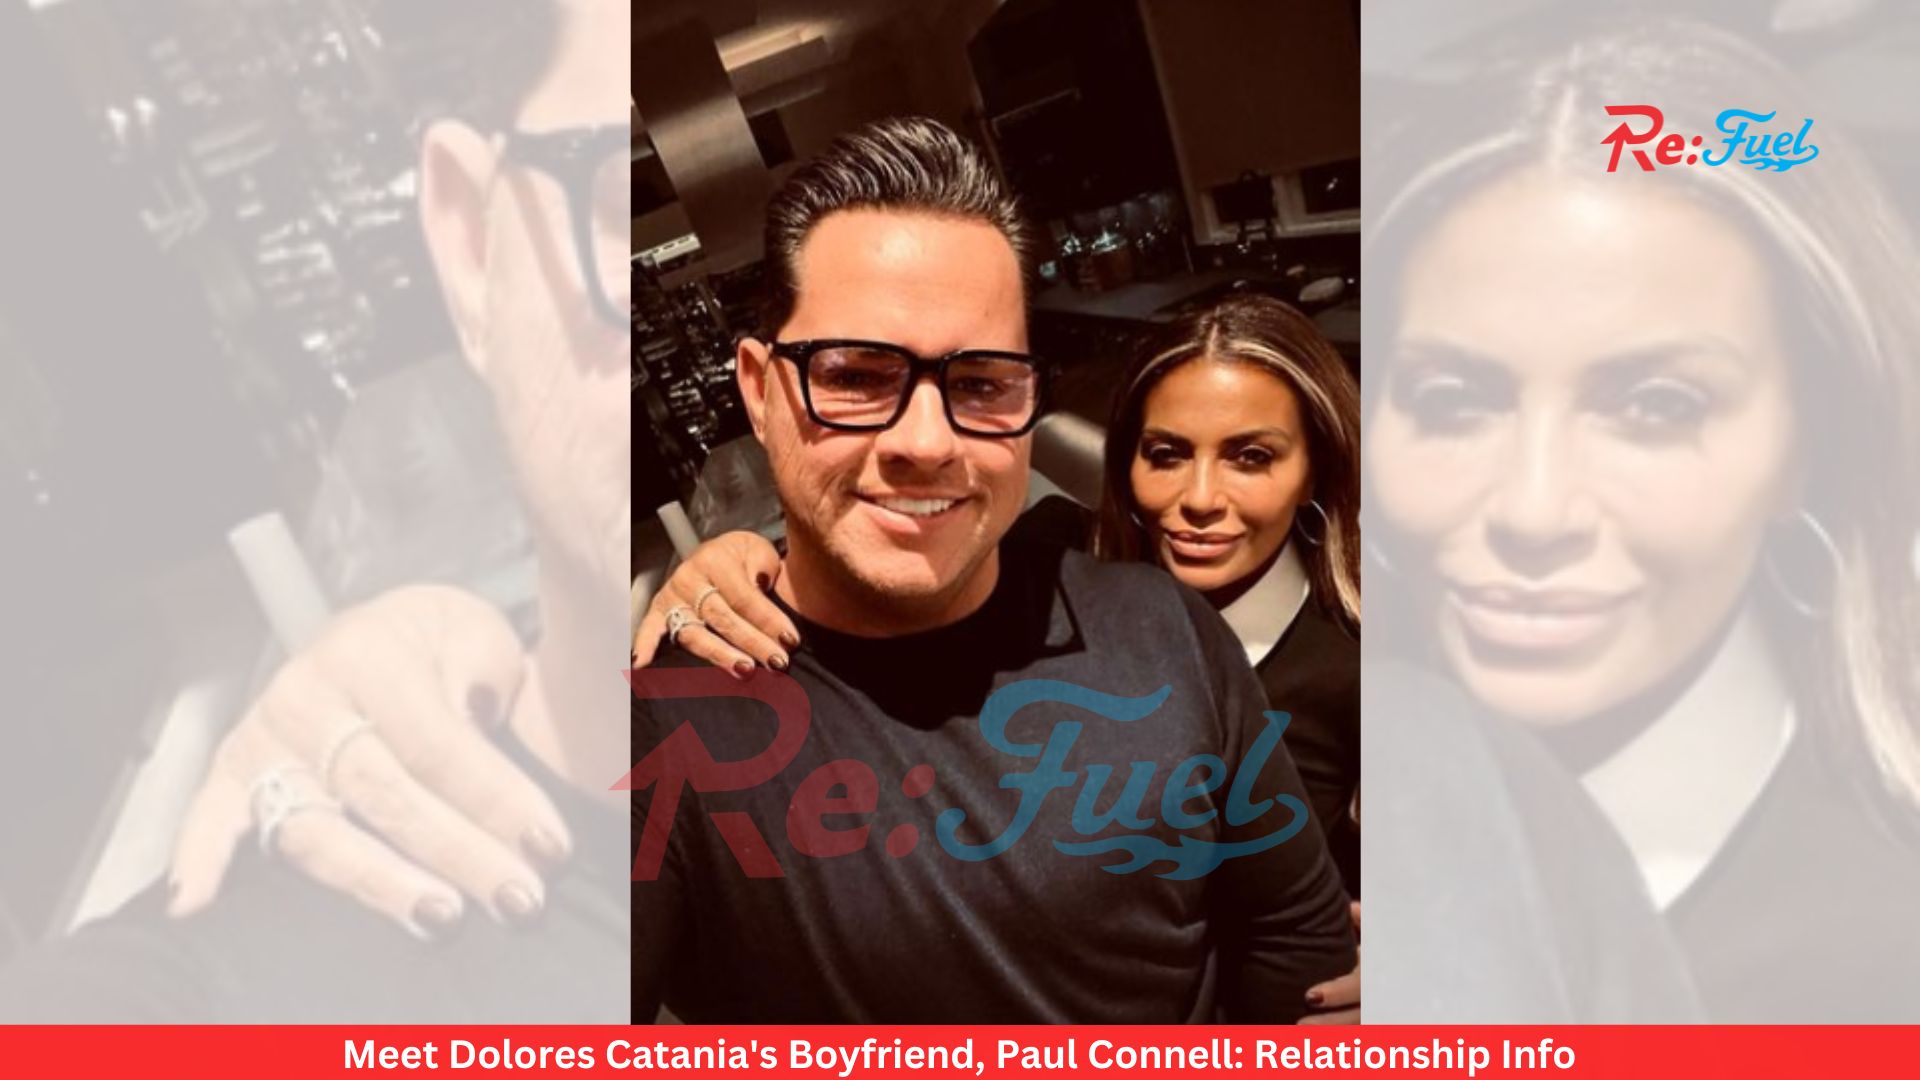 Meet Dolores Catania's Boyfriend, Paul Connell: Relationship Info